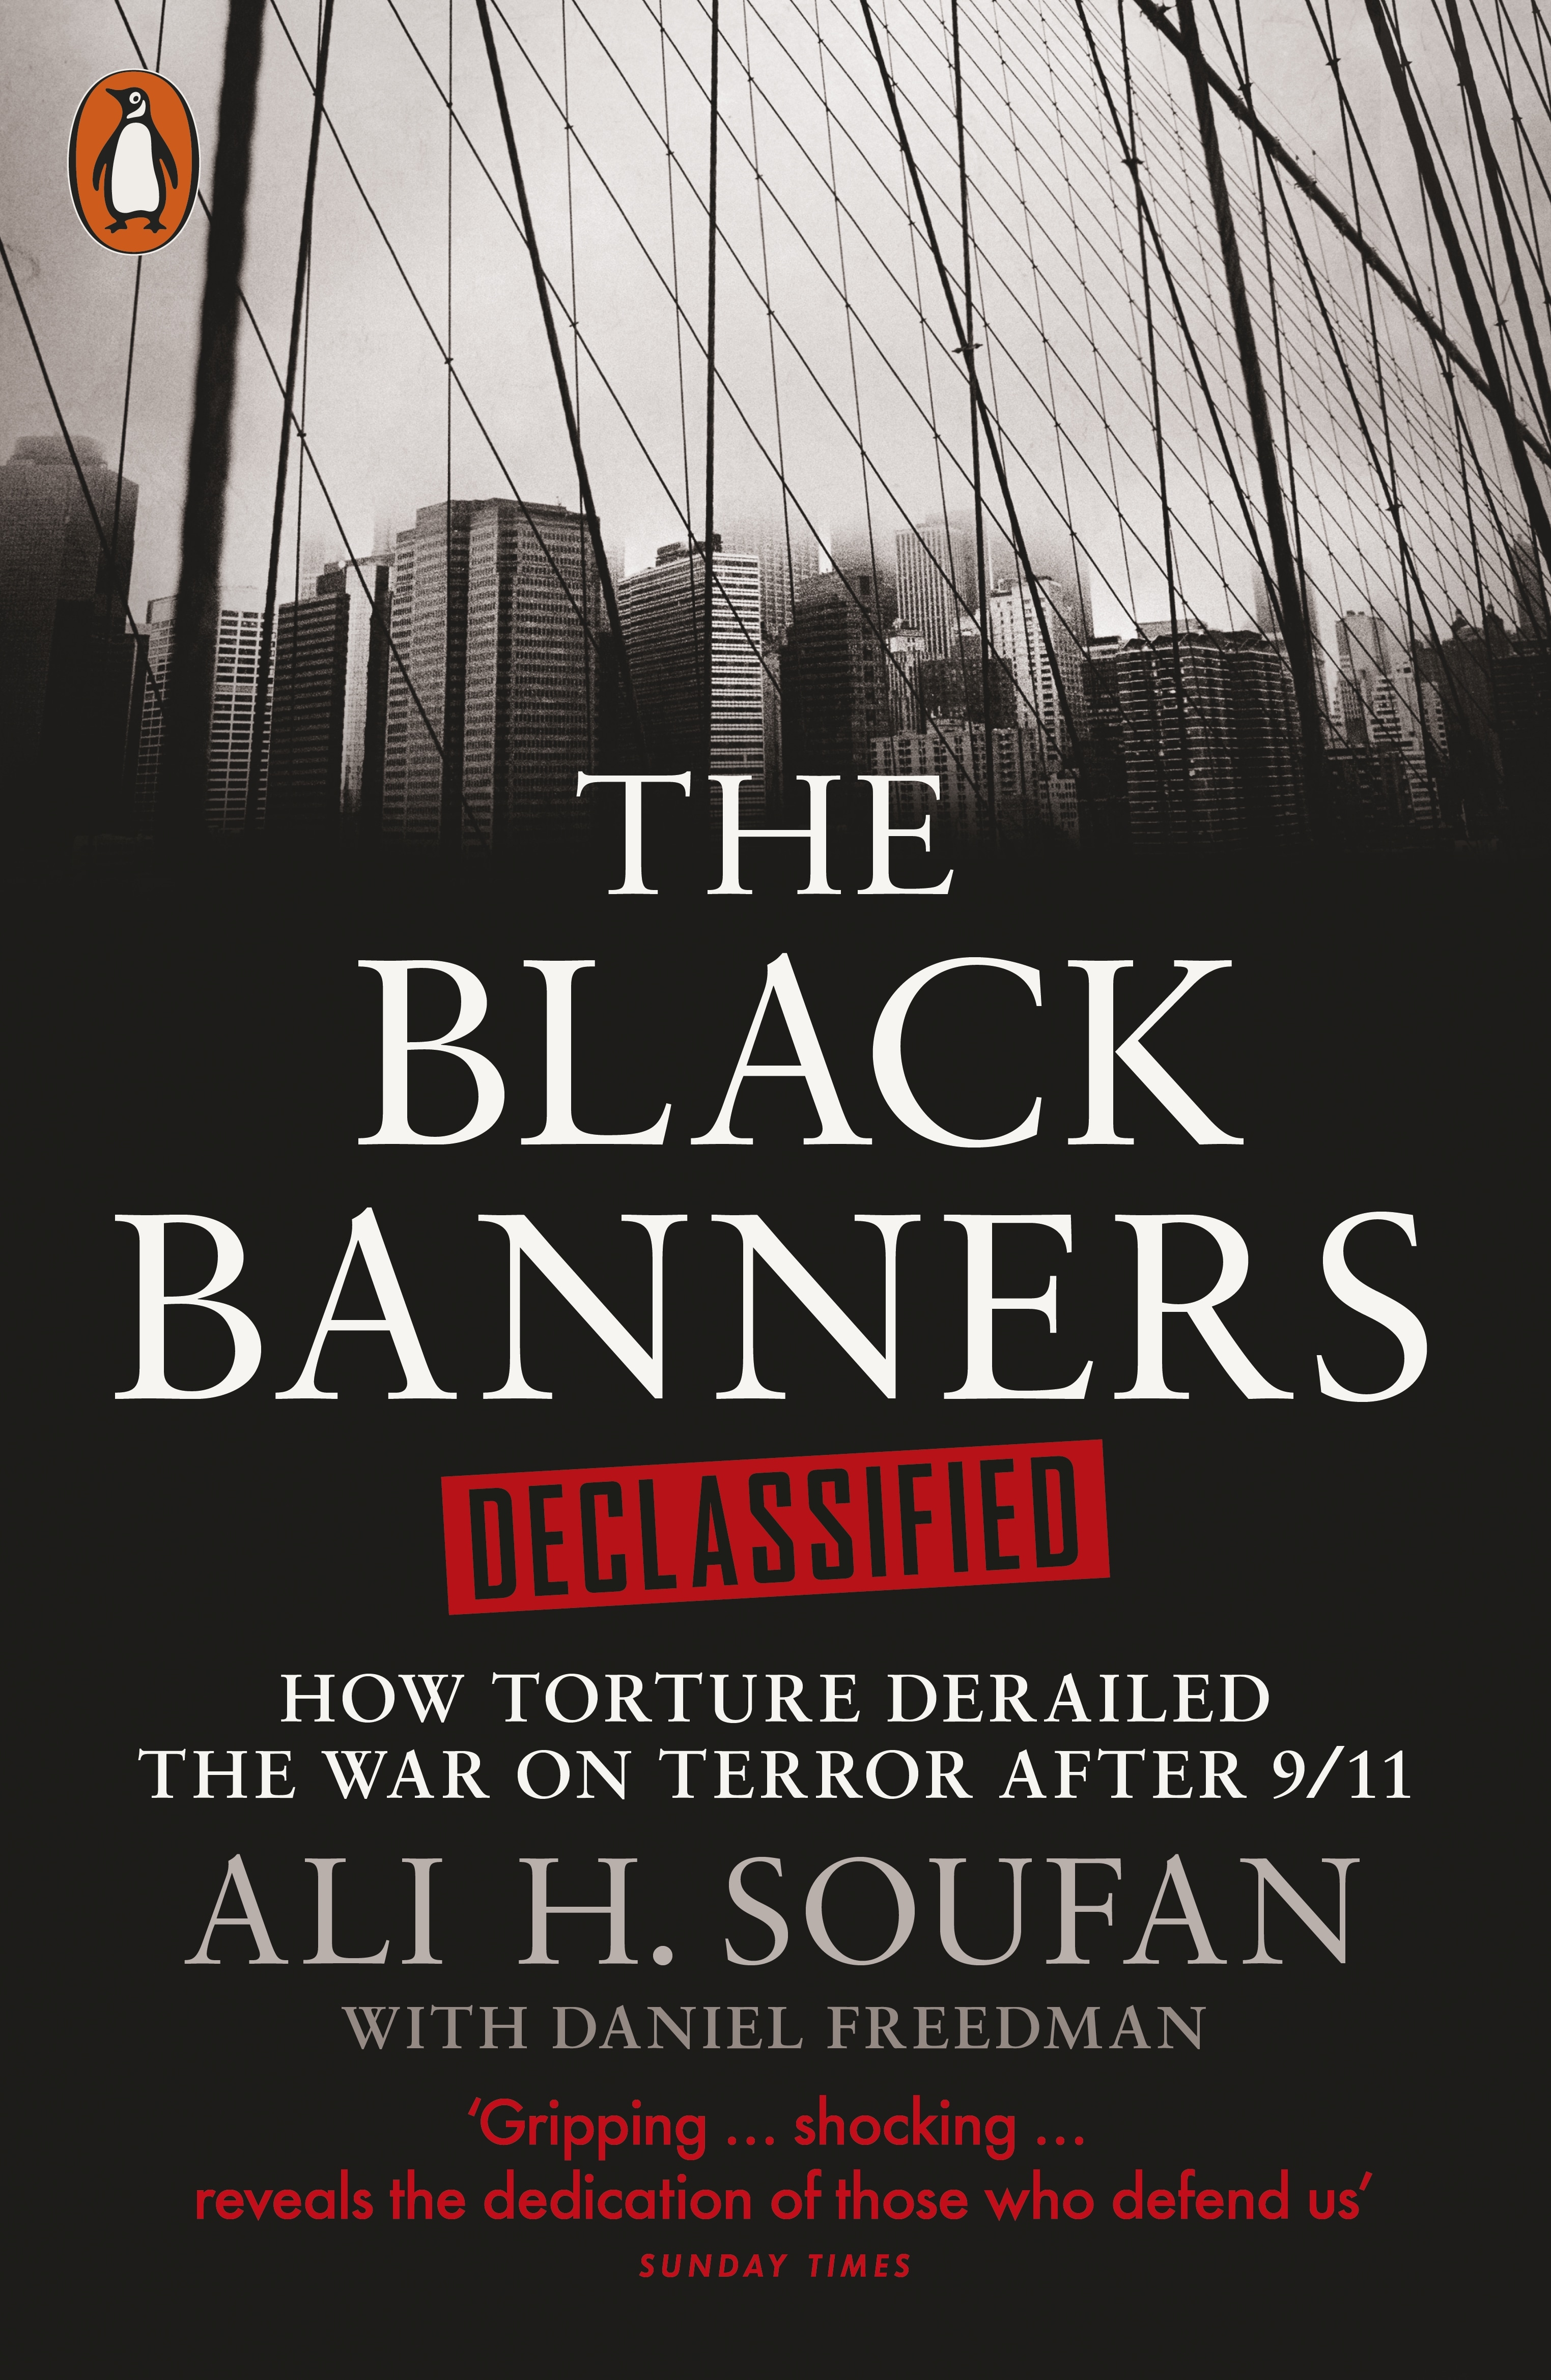 Book “The Black Banners Declassified” by Ali Soufan — March 25, 2021